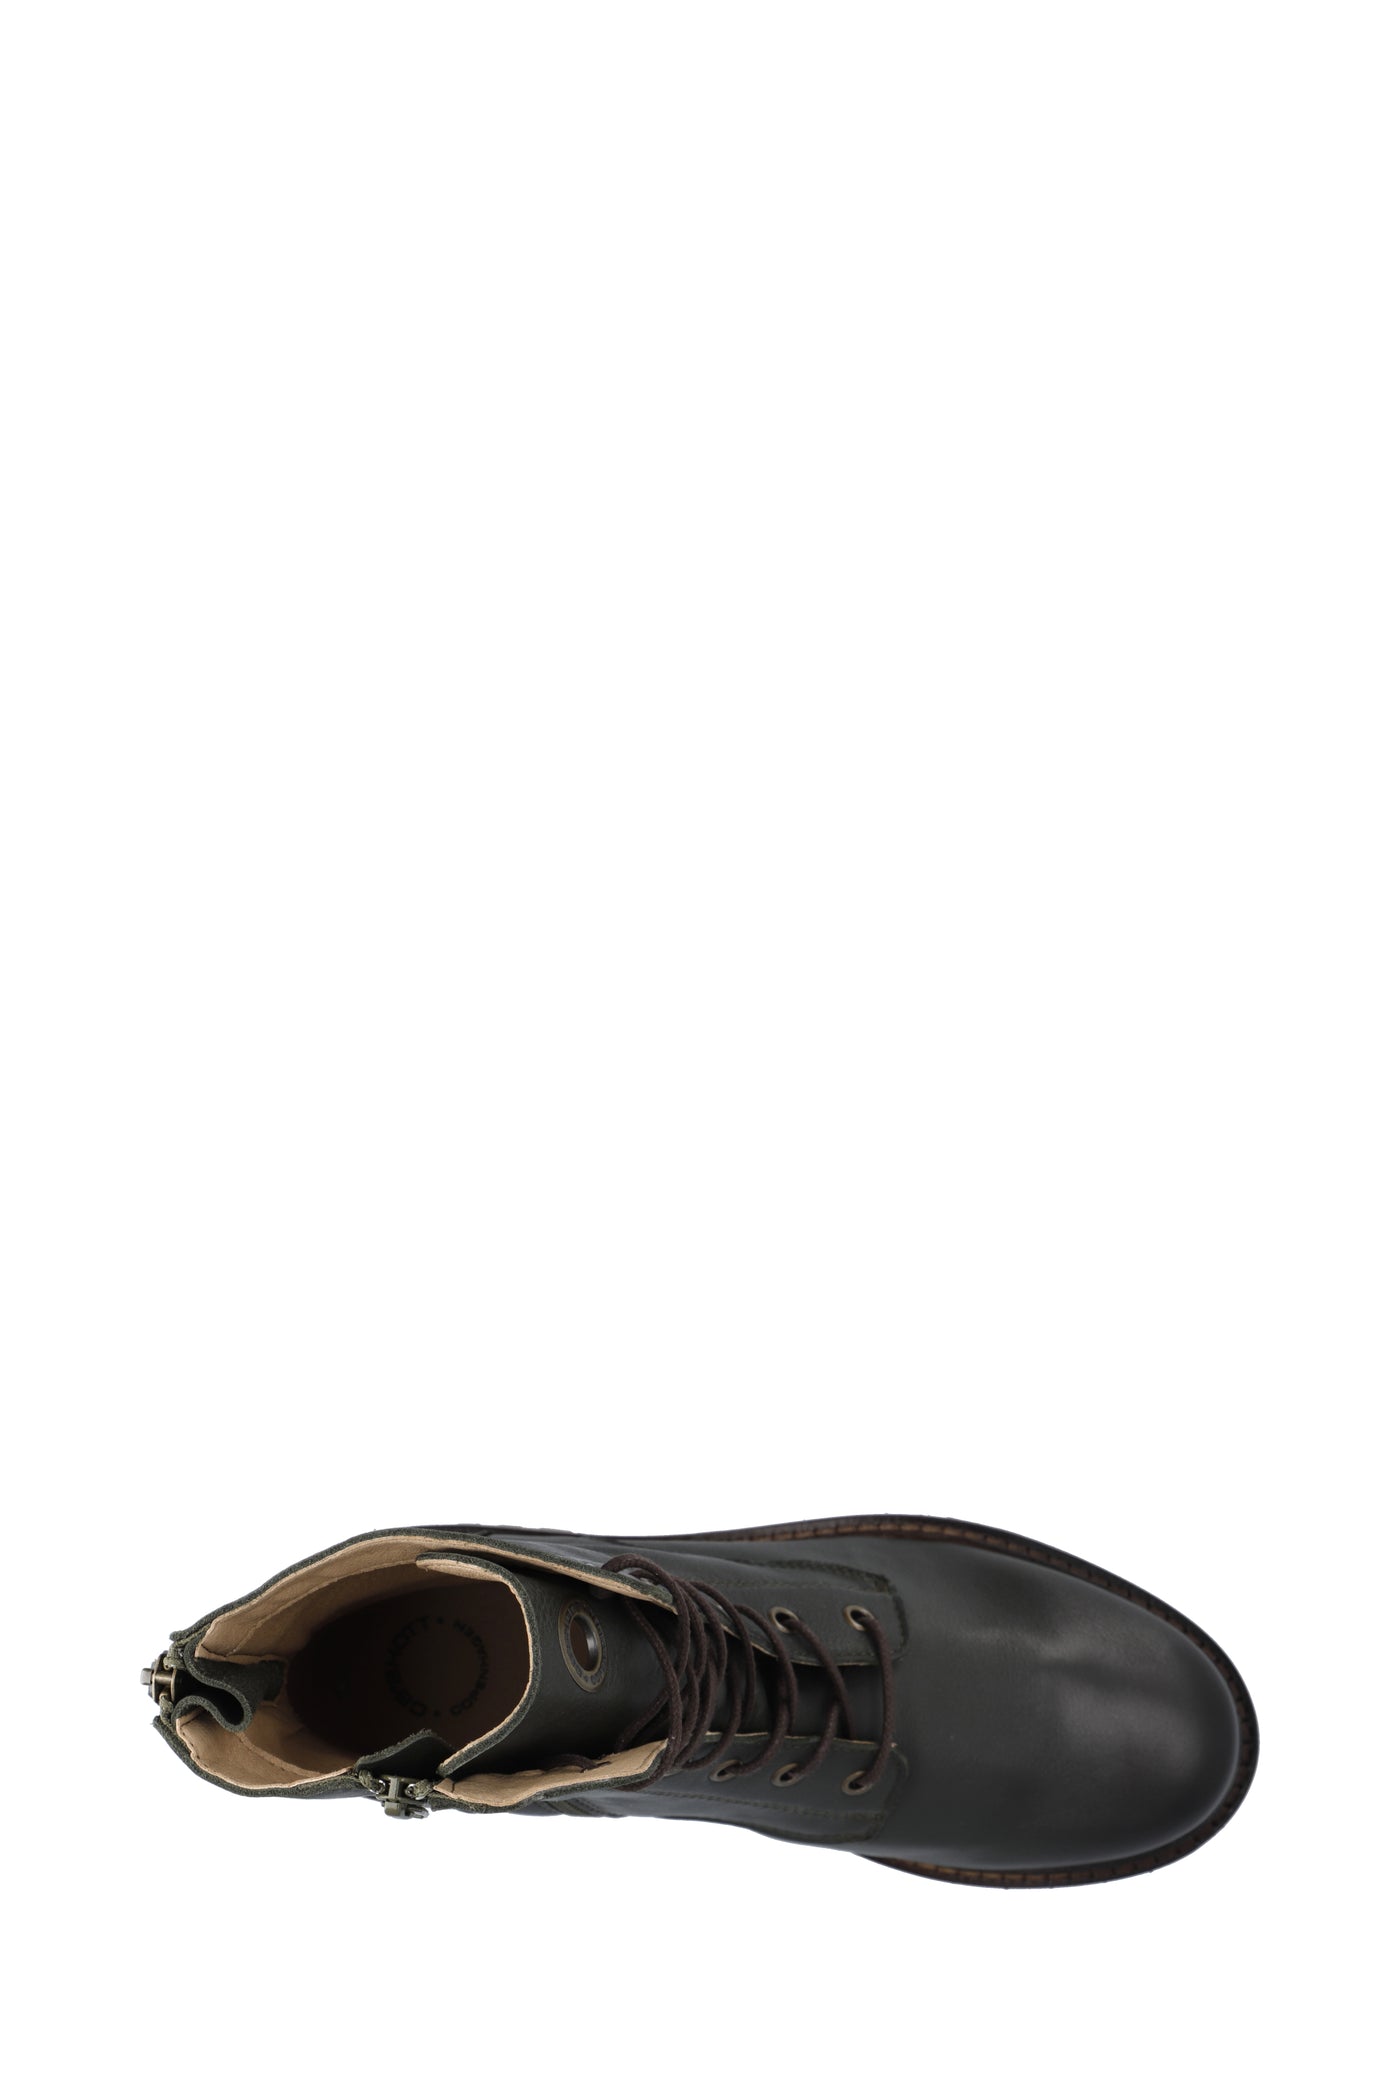 CASHOTT CAAYA Lace Boot Ankle Boots Black Santorini 570